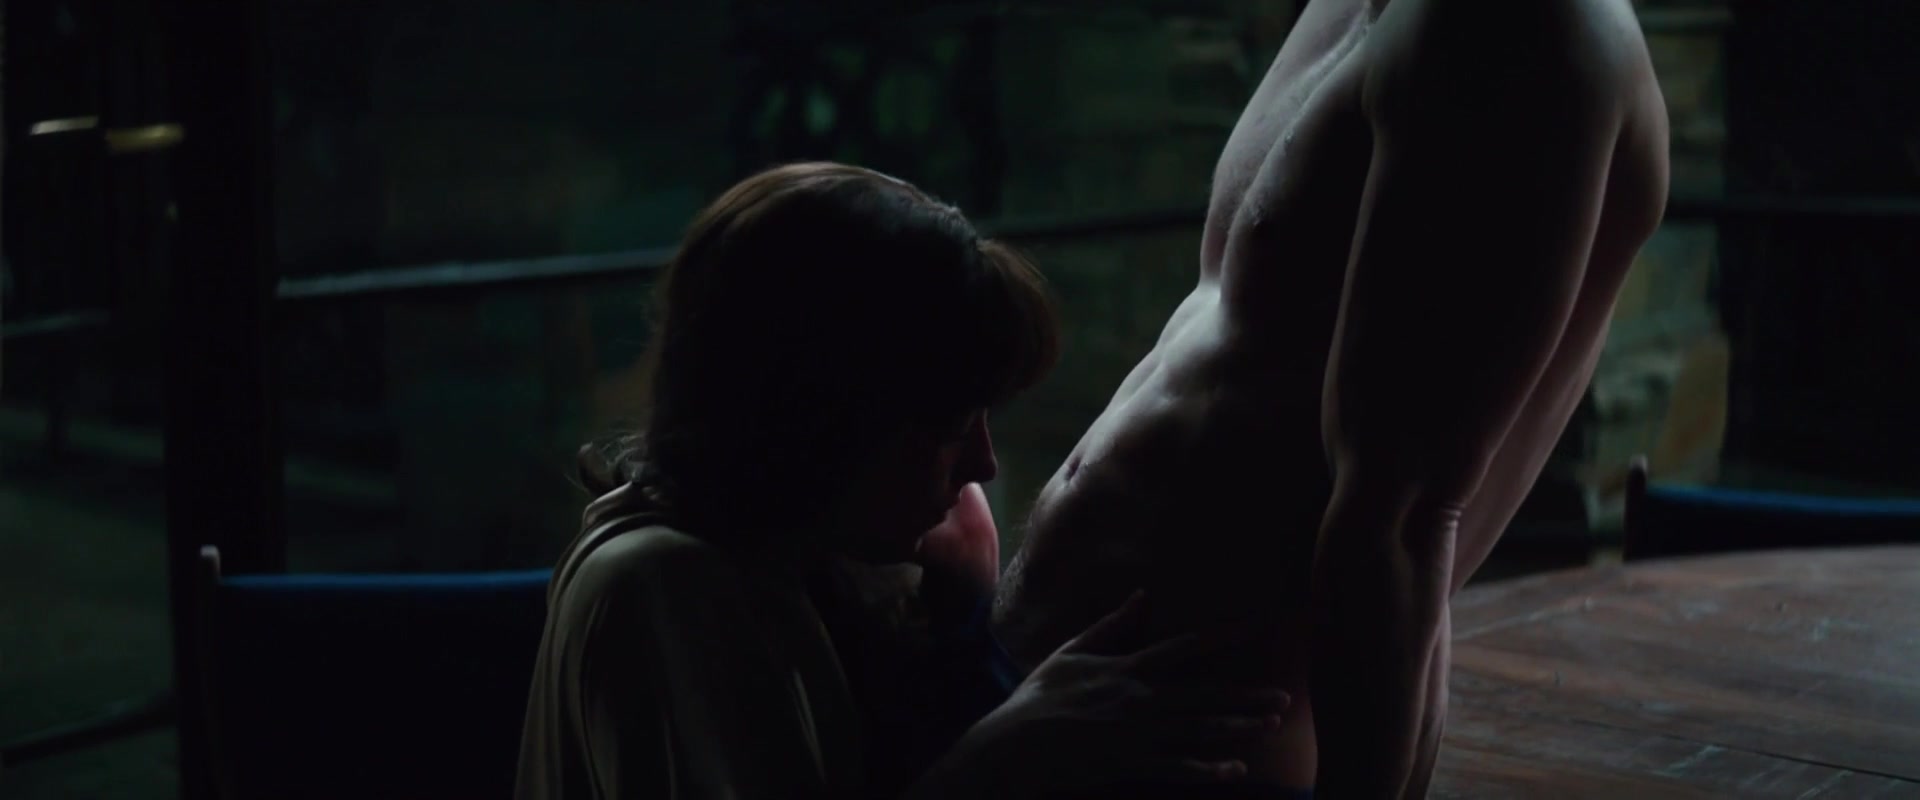 Dakota Johnson sex scene 3 Fifty Shades of Grey (no music). 